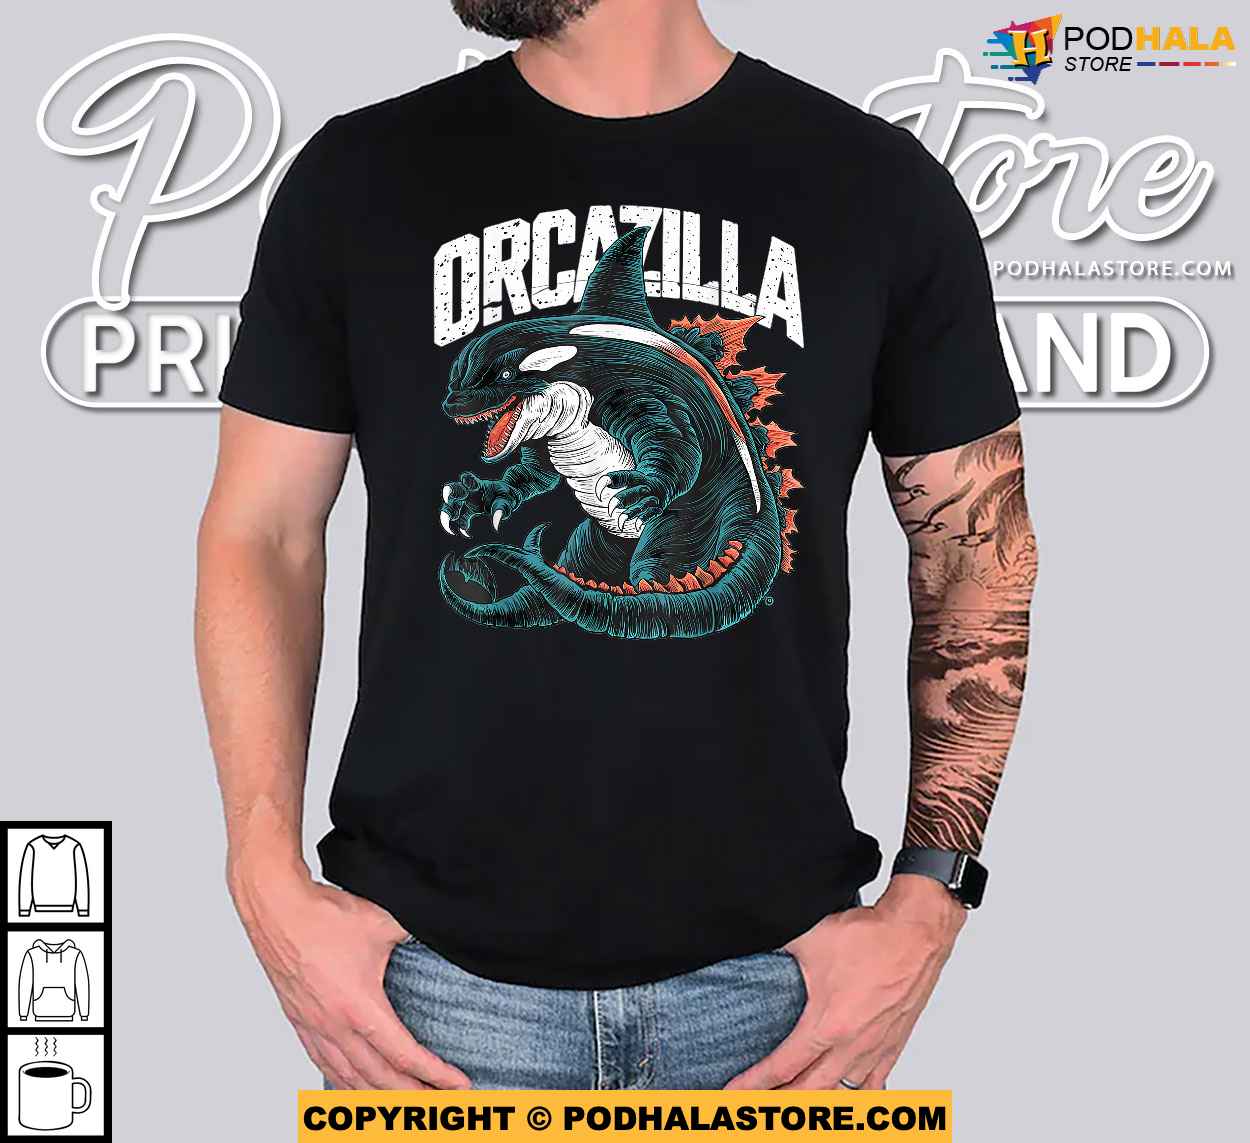 Funny Orca Orcazilla Shirt, Show Your Orca Love